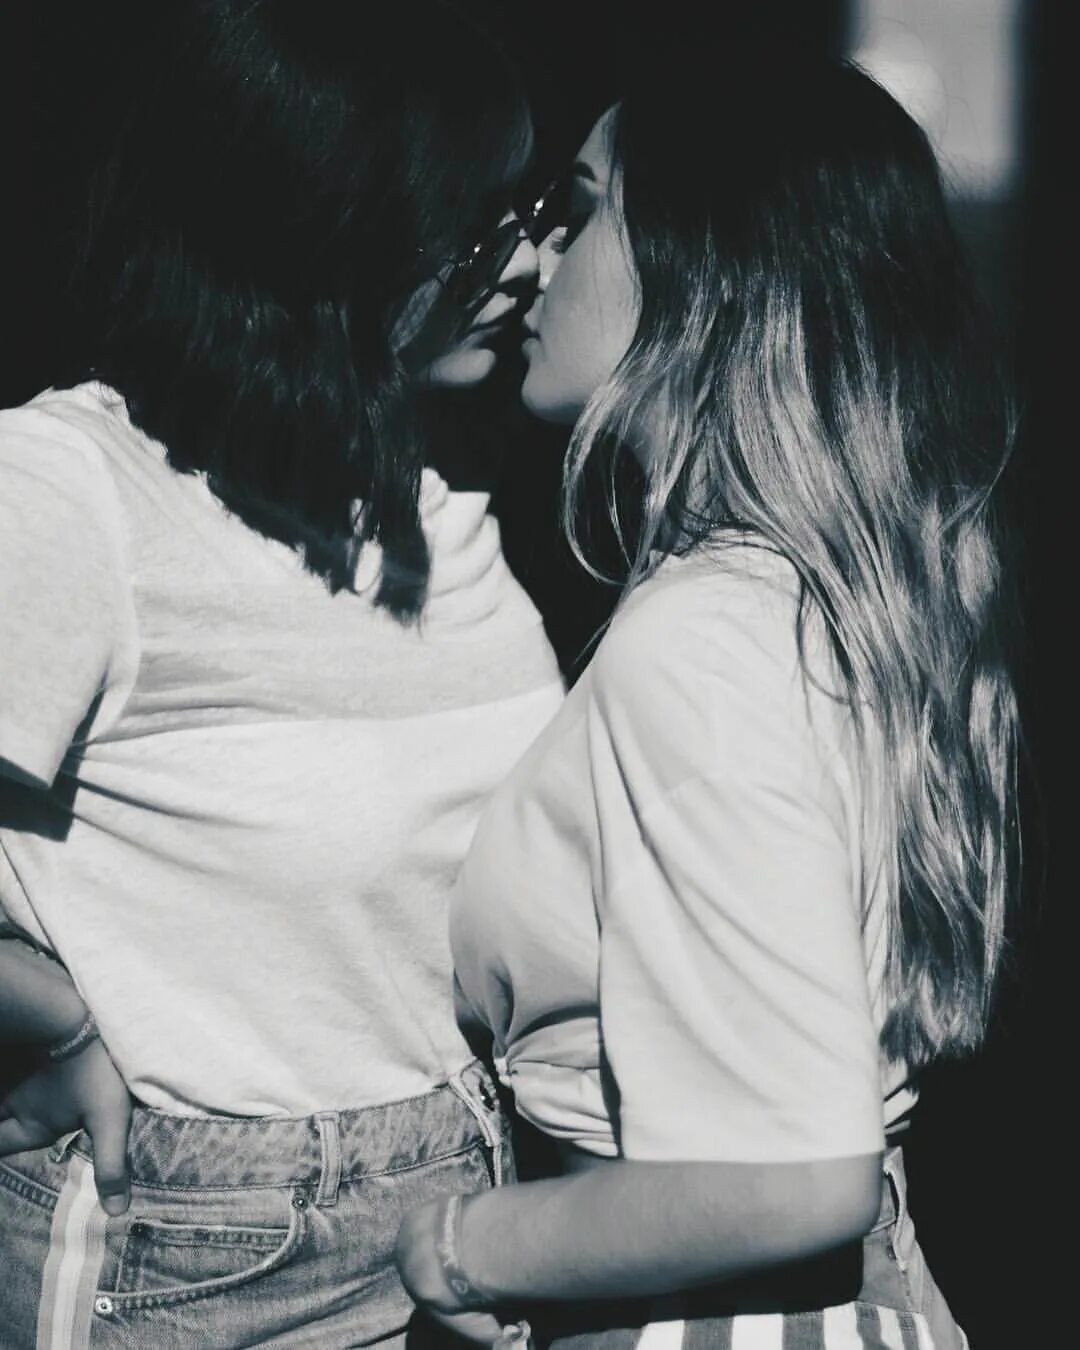 Lesbians machine. Поцелуй девушек. Две девушки любовь. Девушки целуются. Любовь двух девочек.